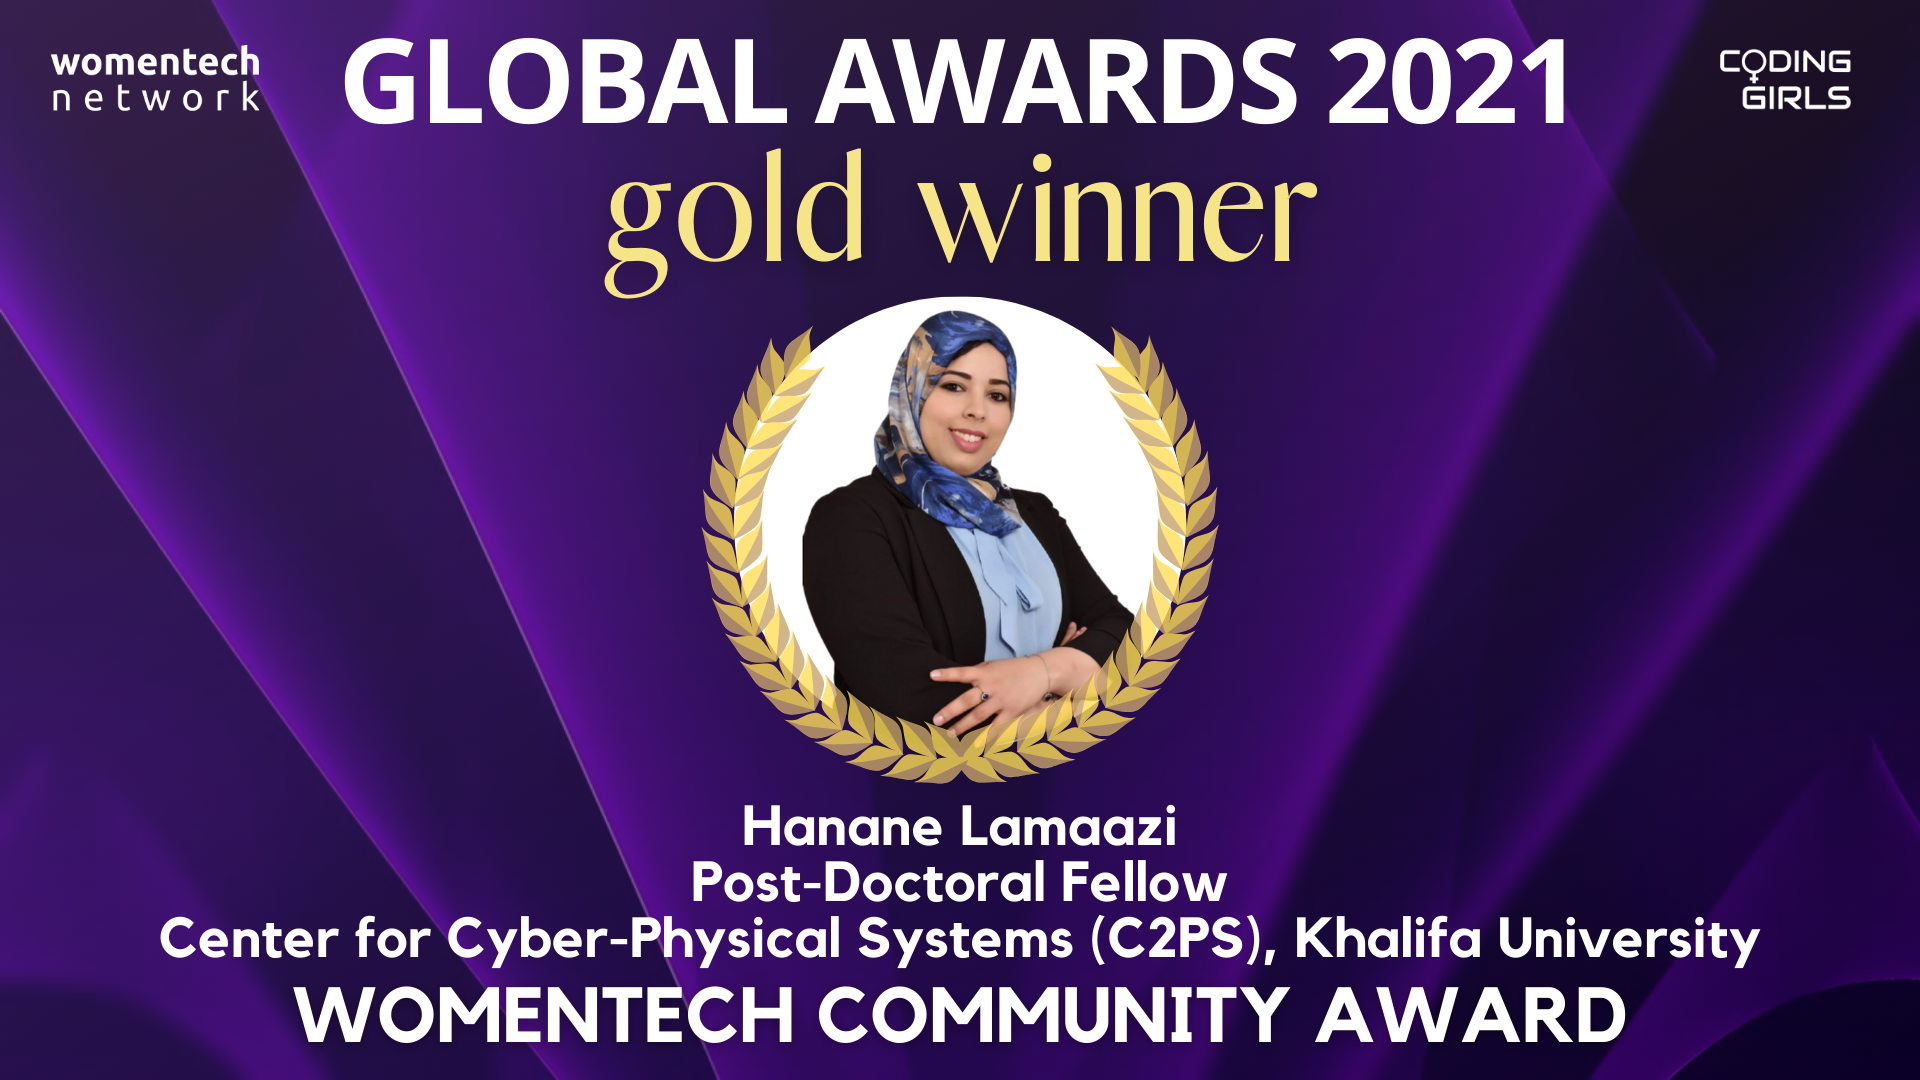 Dr. Hanane Lamaazi Wins Community Award at the WomenTech Global Awards 2021